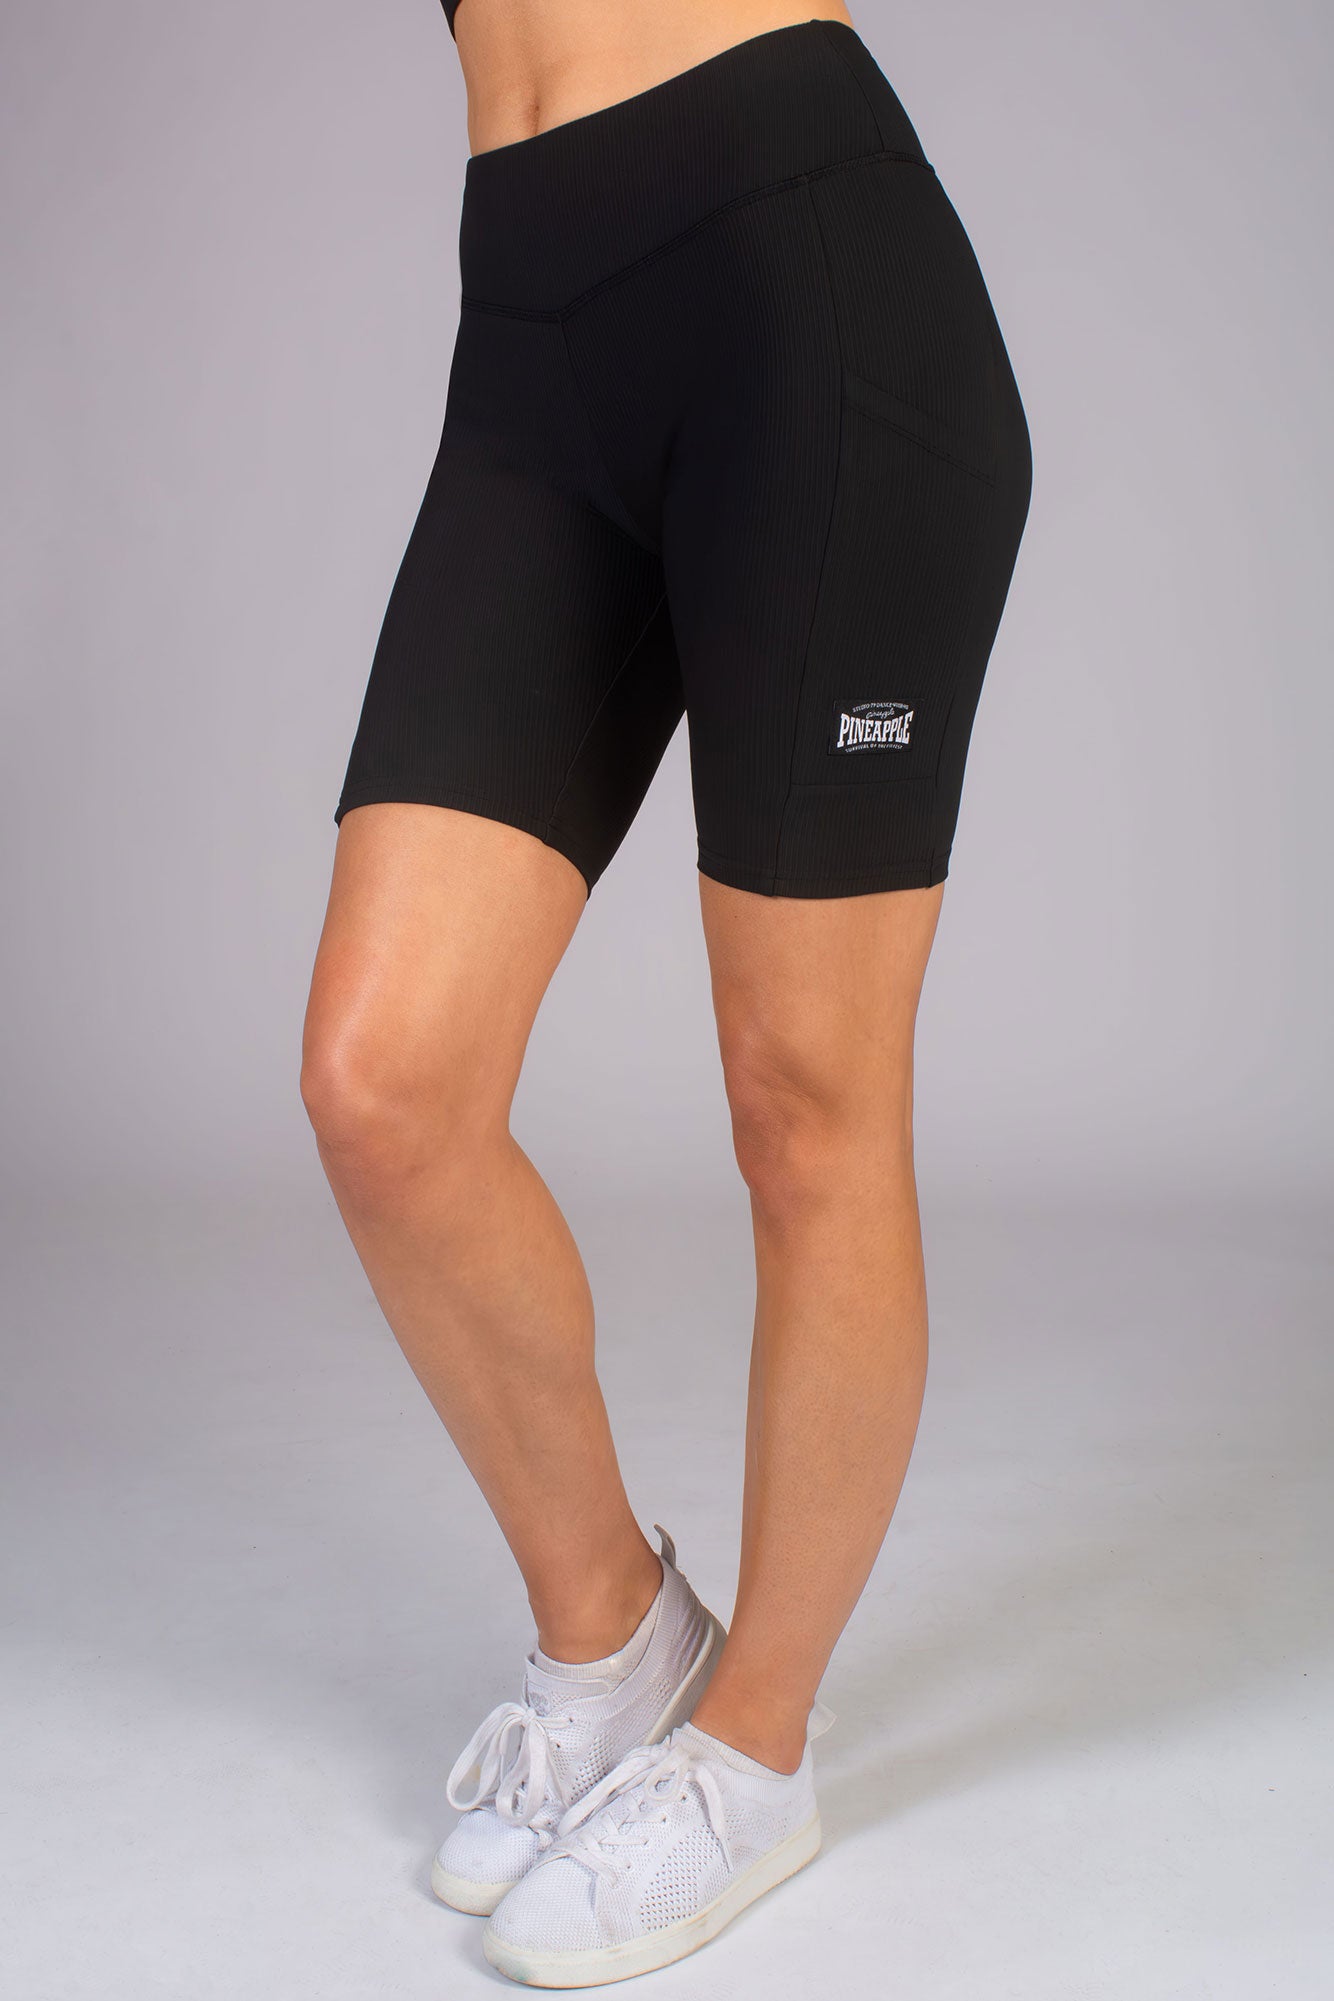 Shorts for Women, Cycling Shorts, Hotpants, Sporty Shorts